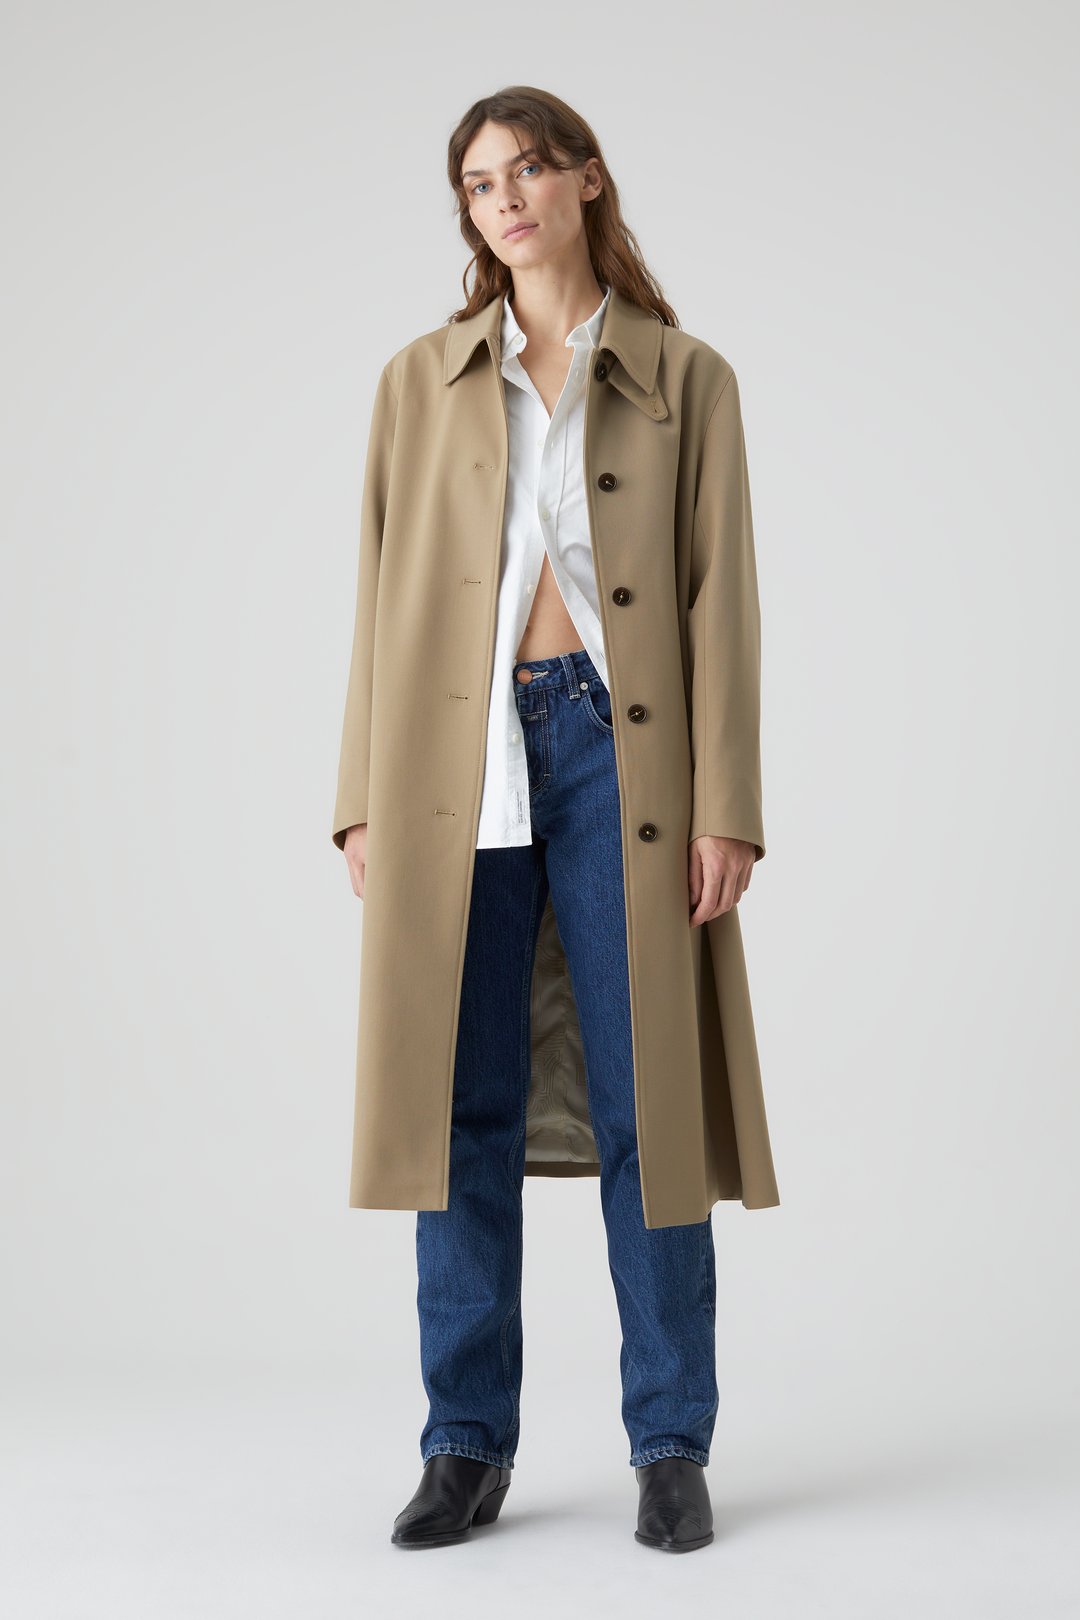 discount 89% WOMEN FASHION Coats Basic Pull&Bear Long coat Navy Blue XL 